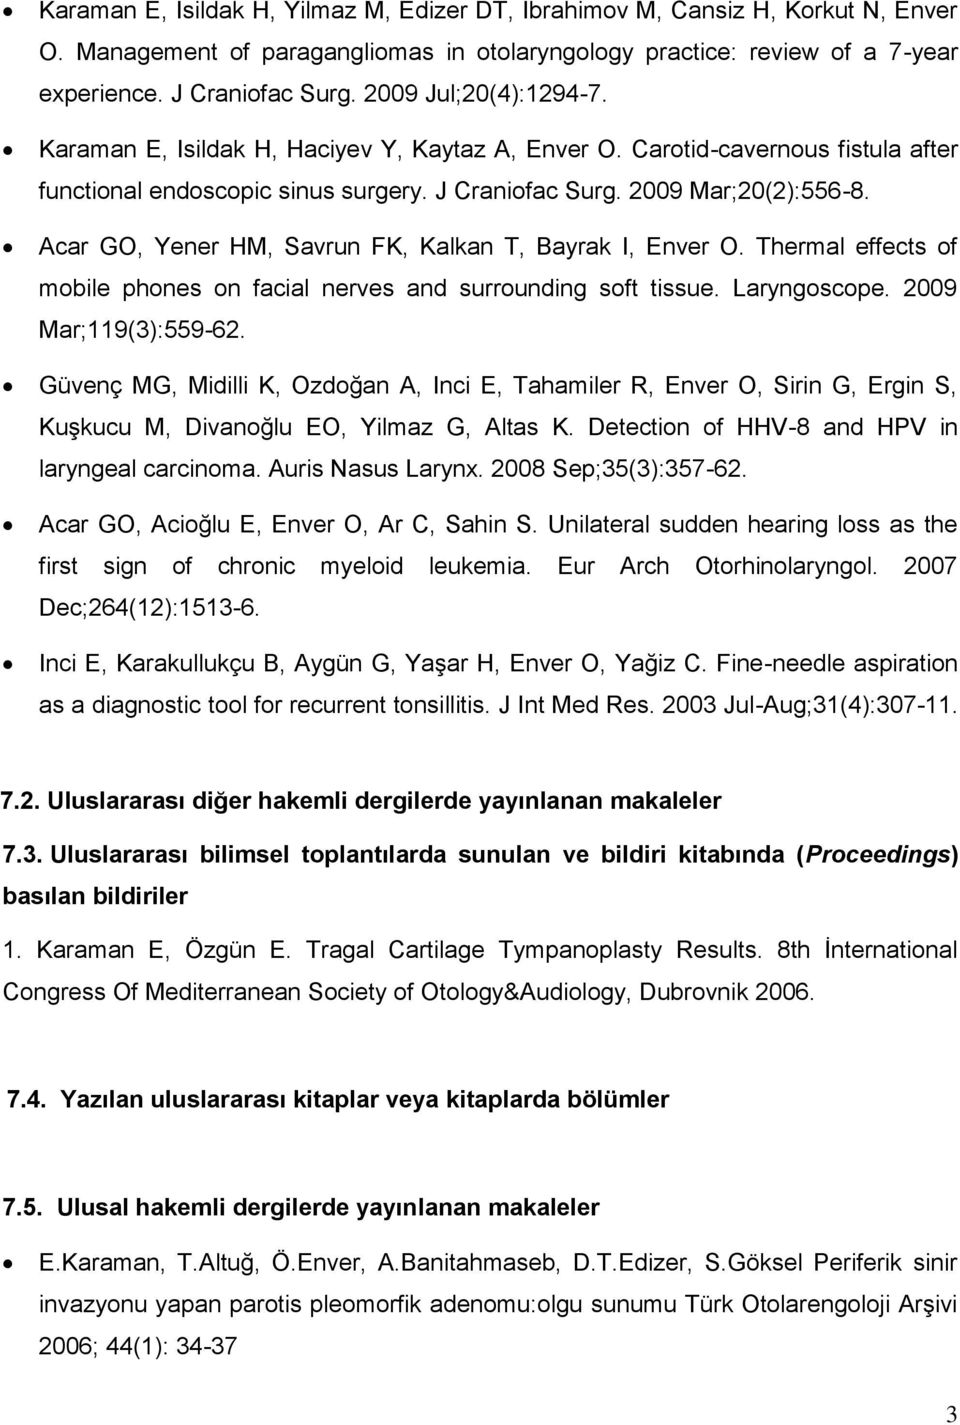 Acar GO, Yener HM, Savrun FK, Kalkan T, Bayrak I, Enver O. Thermal effects of mobile phones on facial nerves and surrounding soft tissue. Laryngoscope. 2009 Mar;119(3):559-62.